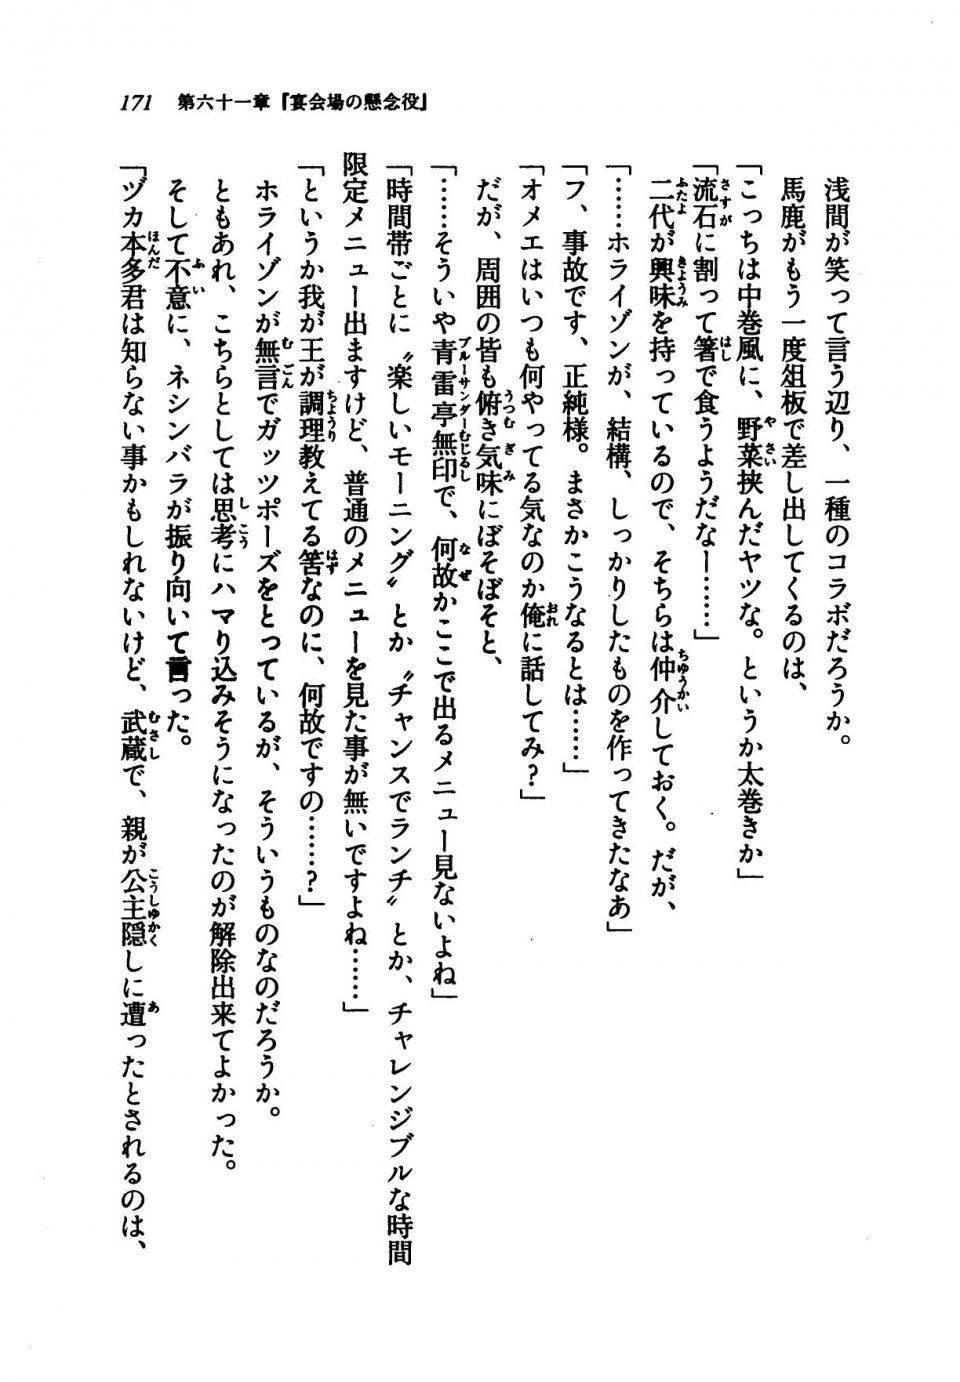 Kyoukai Senjou no Horizon LN Vol 21(8C) Part 1 - Photo #170